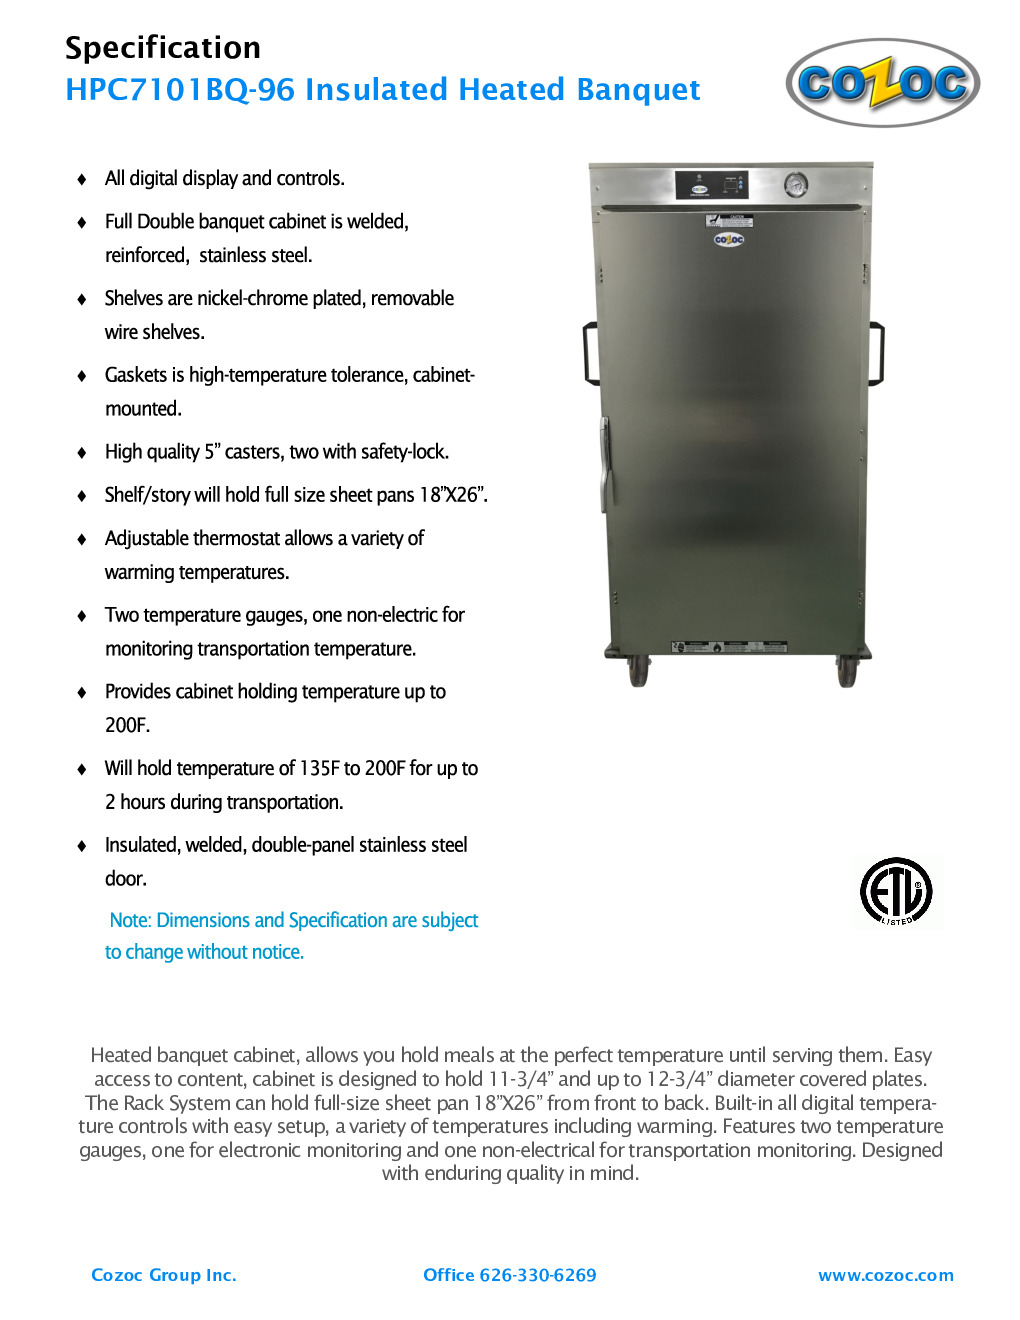 Cozoc HPC7101BQ-96 Half-Height Heated Holding Proofing Cabinet